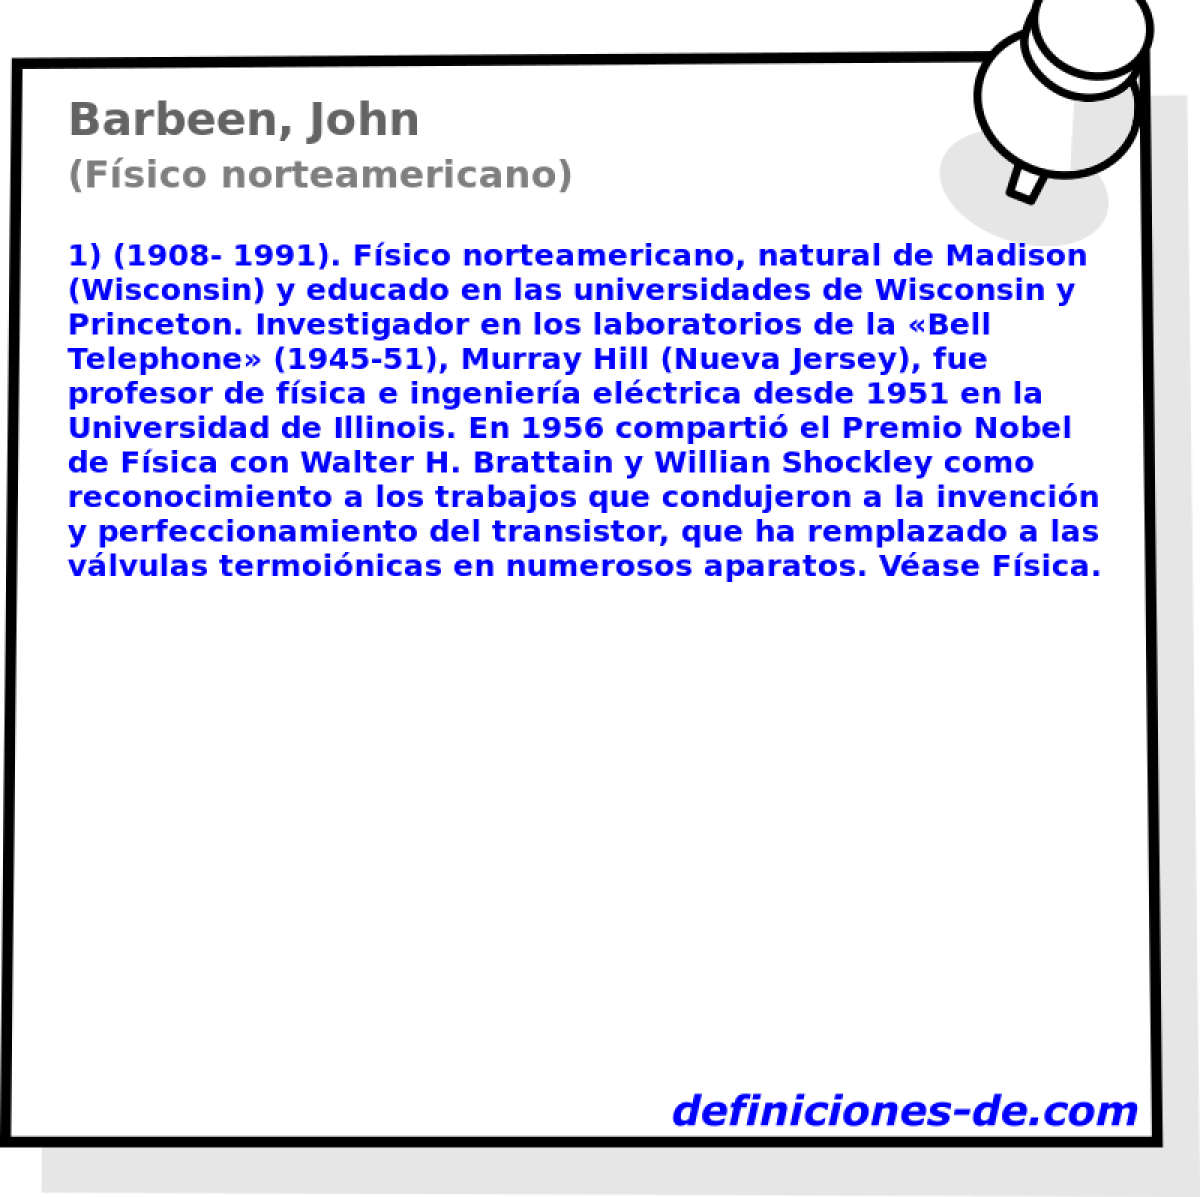 Barbeen, John (Fsico norteamericano)